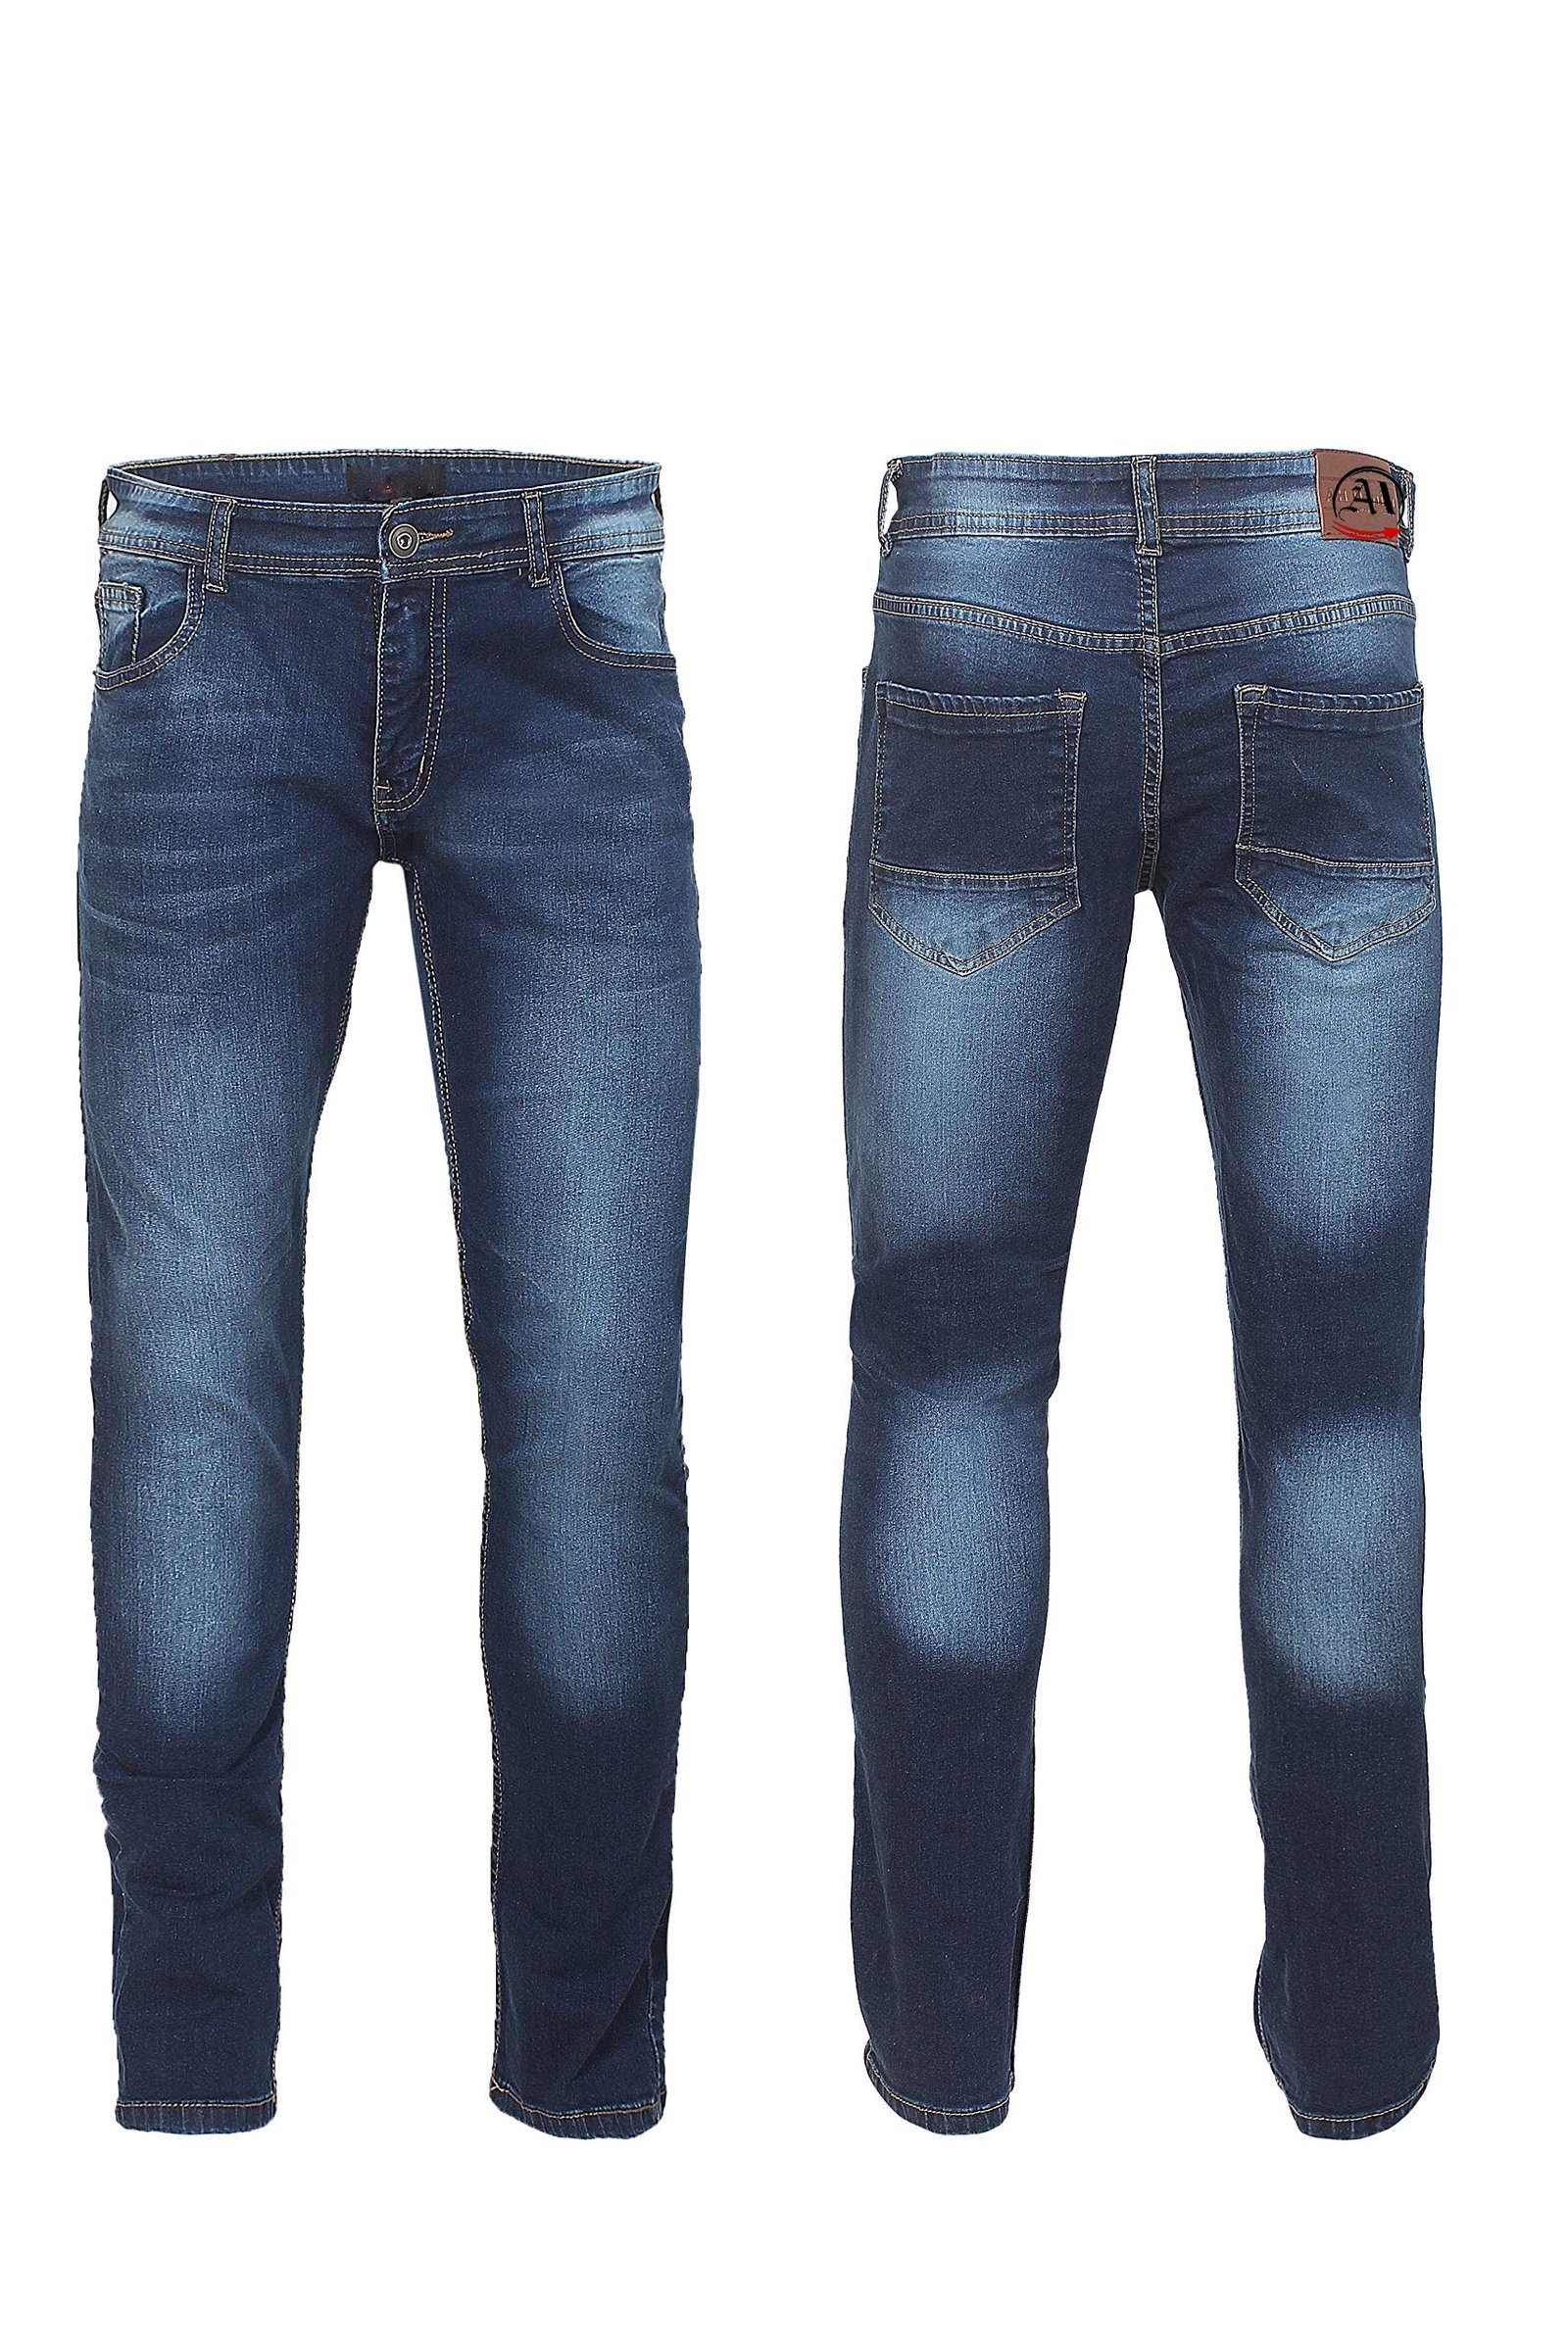 AH Denim Modern Slim Fit Stretch Straight-Leg Jean … - AH Online Stores